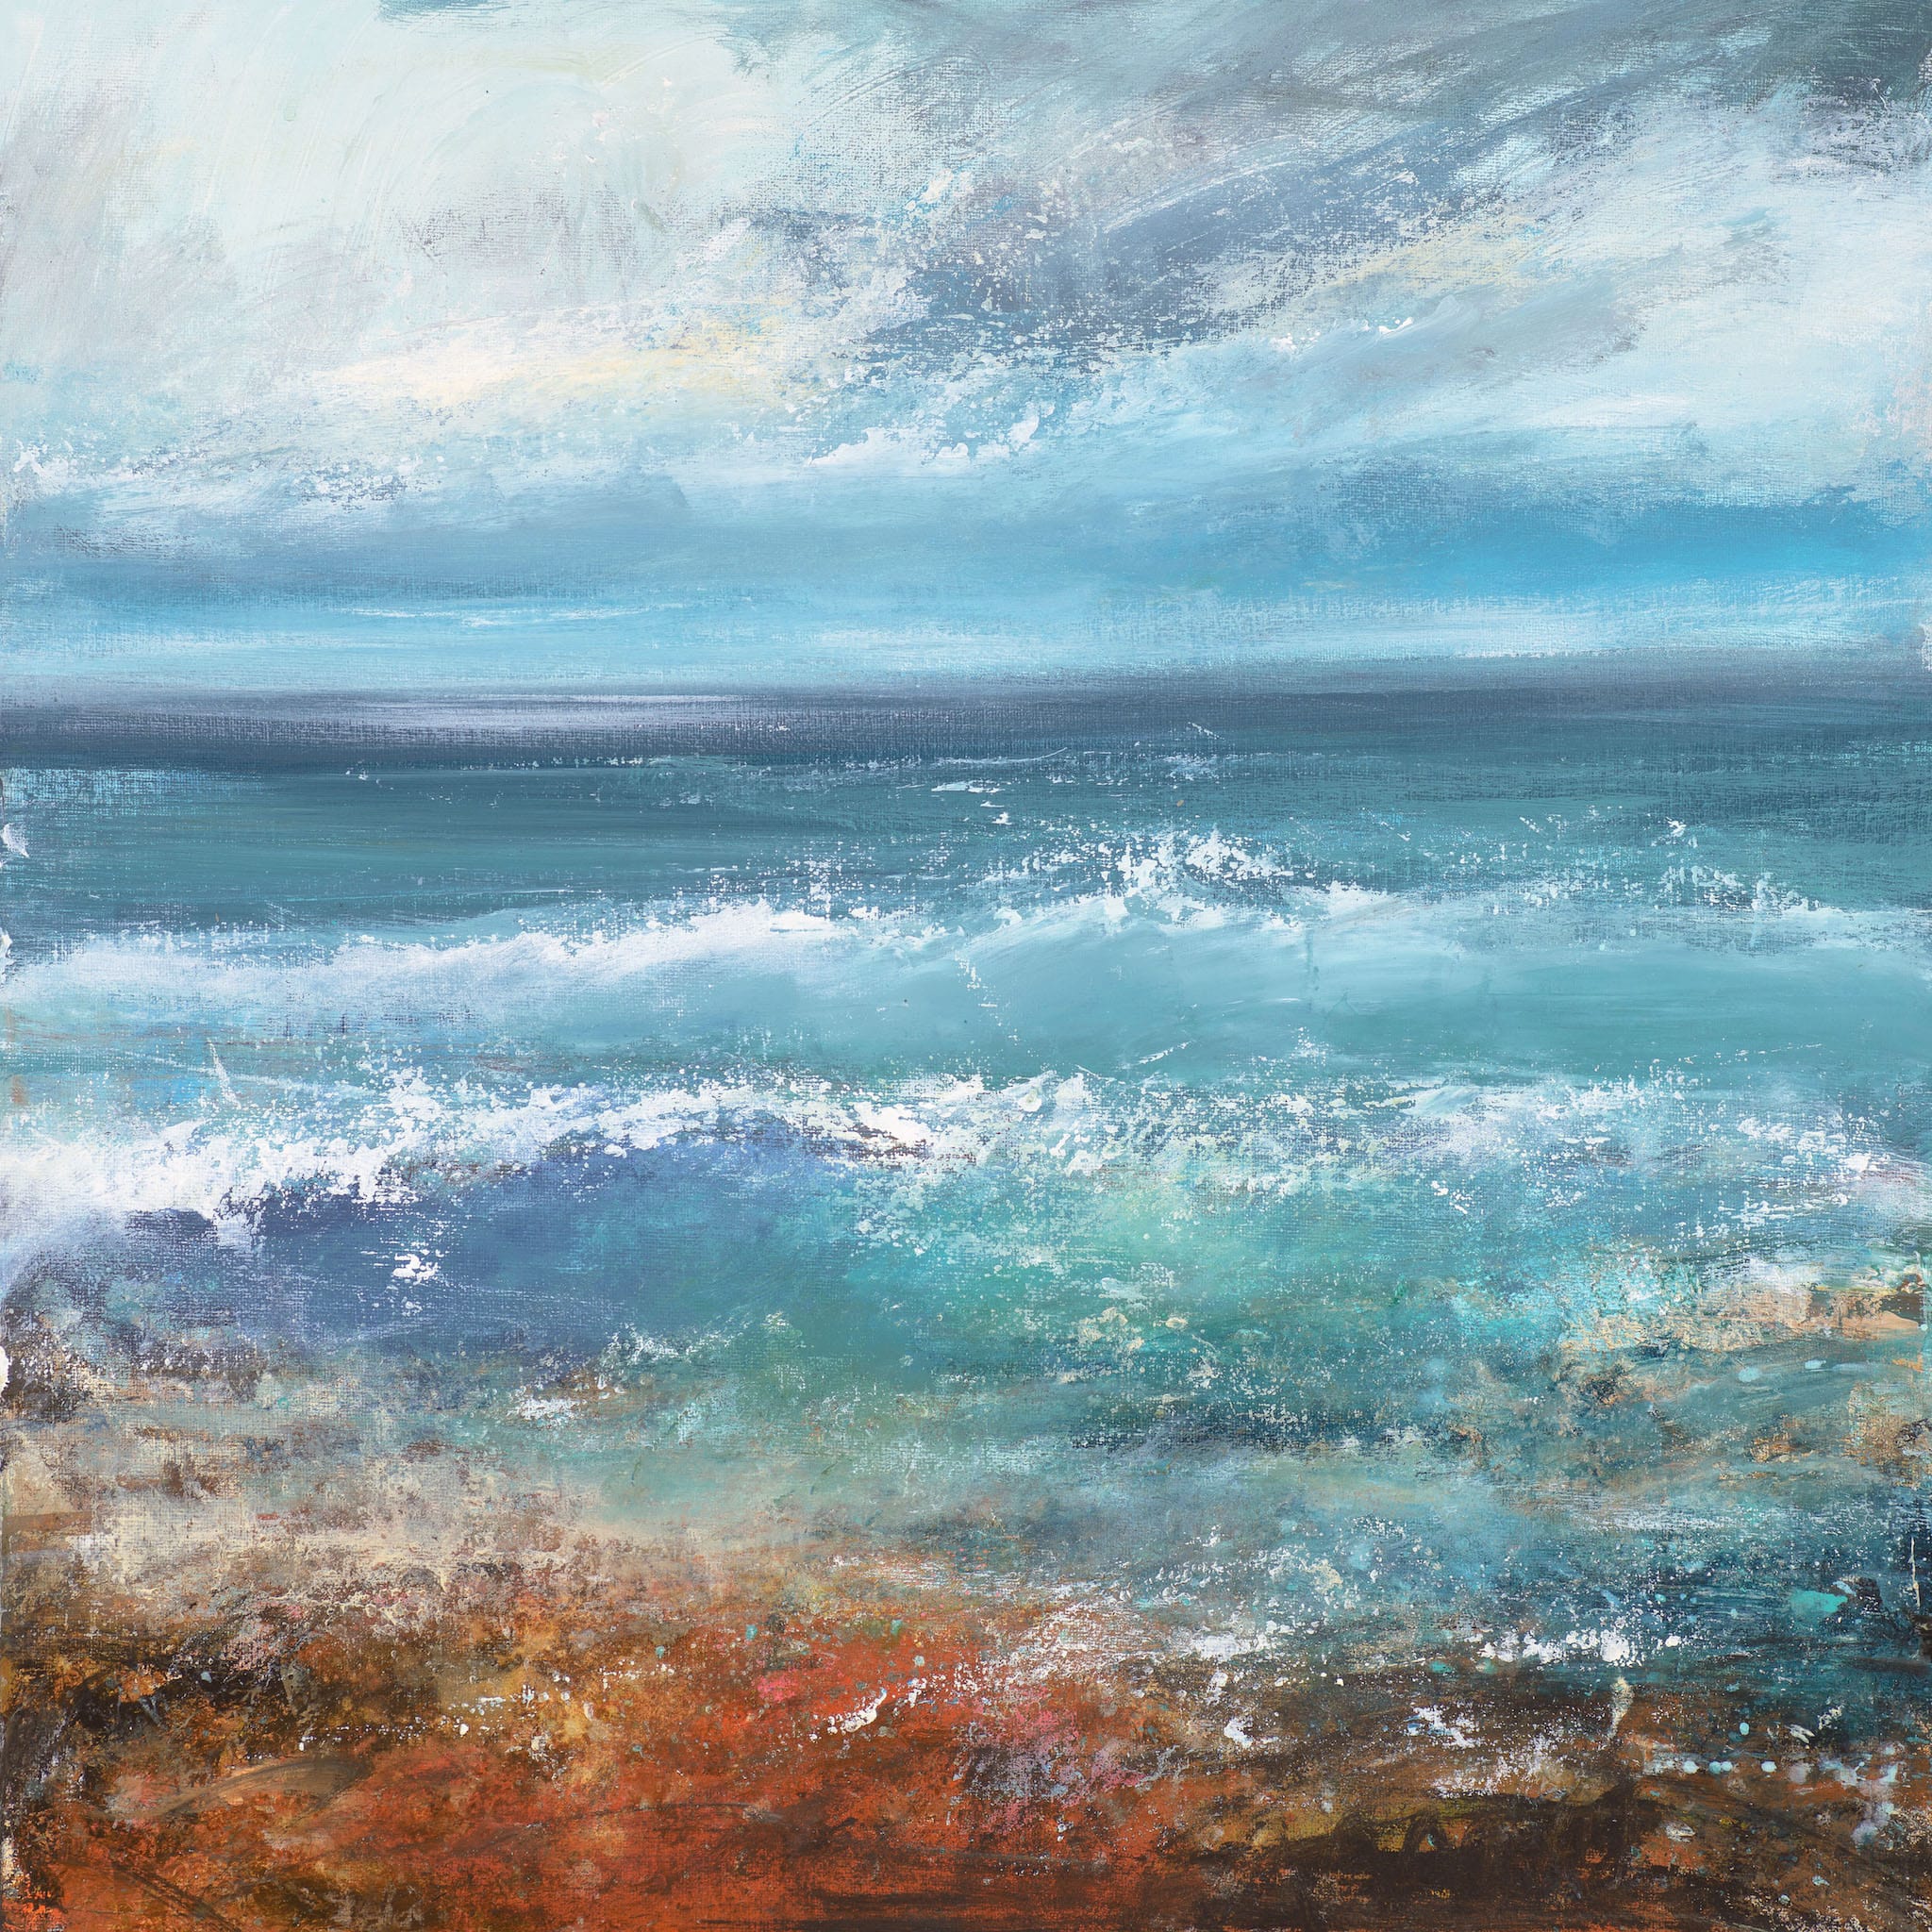 Oil painting of cornish seas by artist Amanda Hoskin